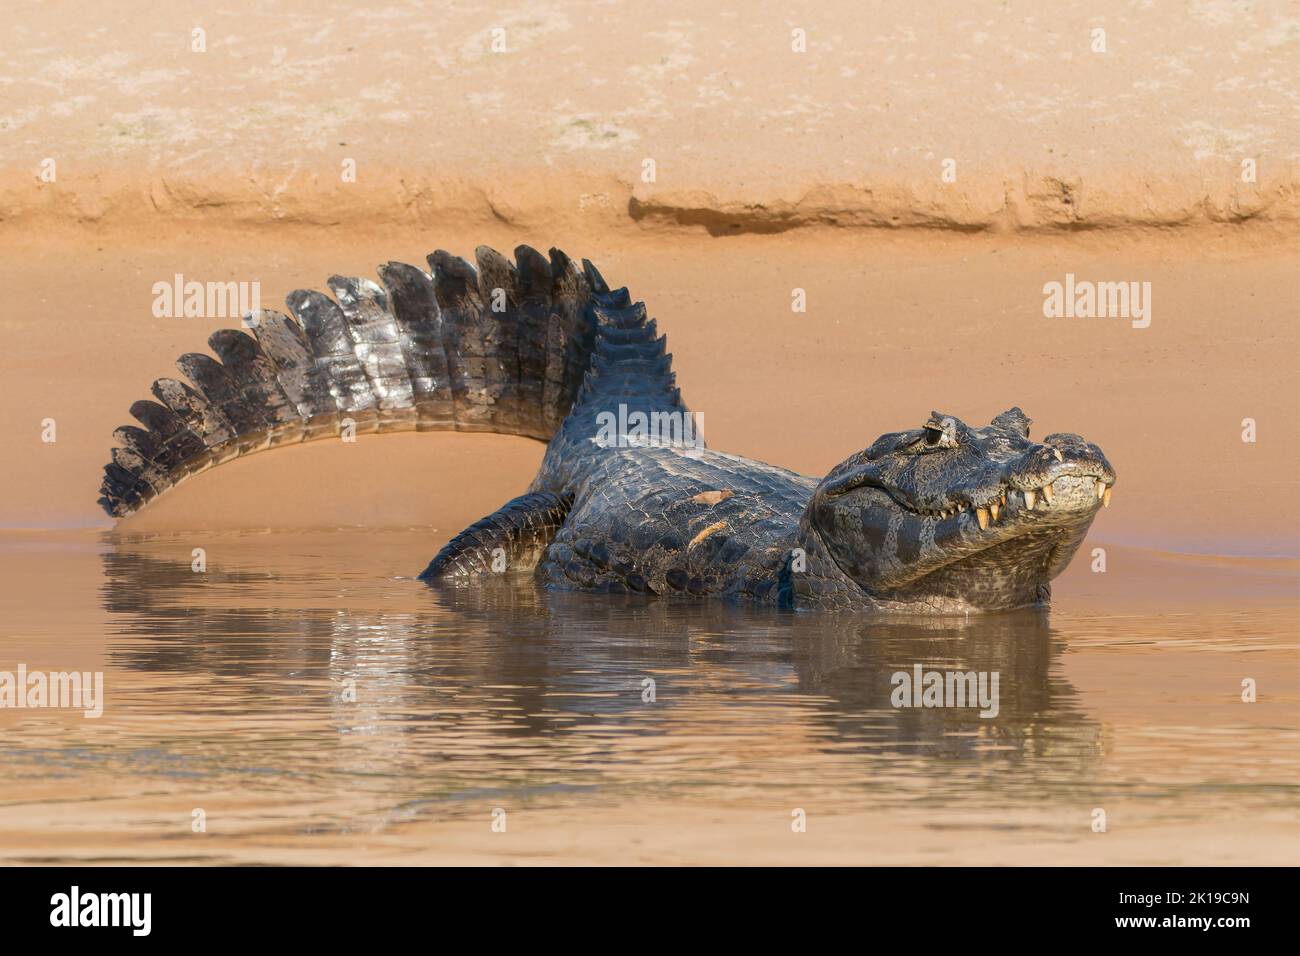 Jacare caiman or Yacare caiman, Caiman yacare, single adult resting on sand bank, Pantanal, Brazil Stock Photo